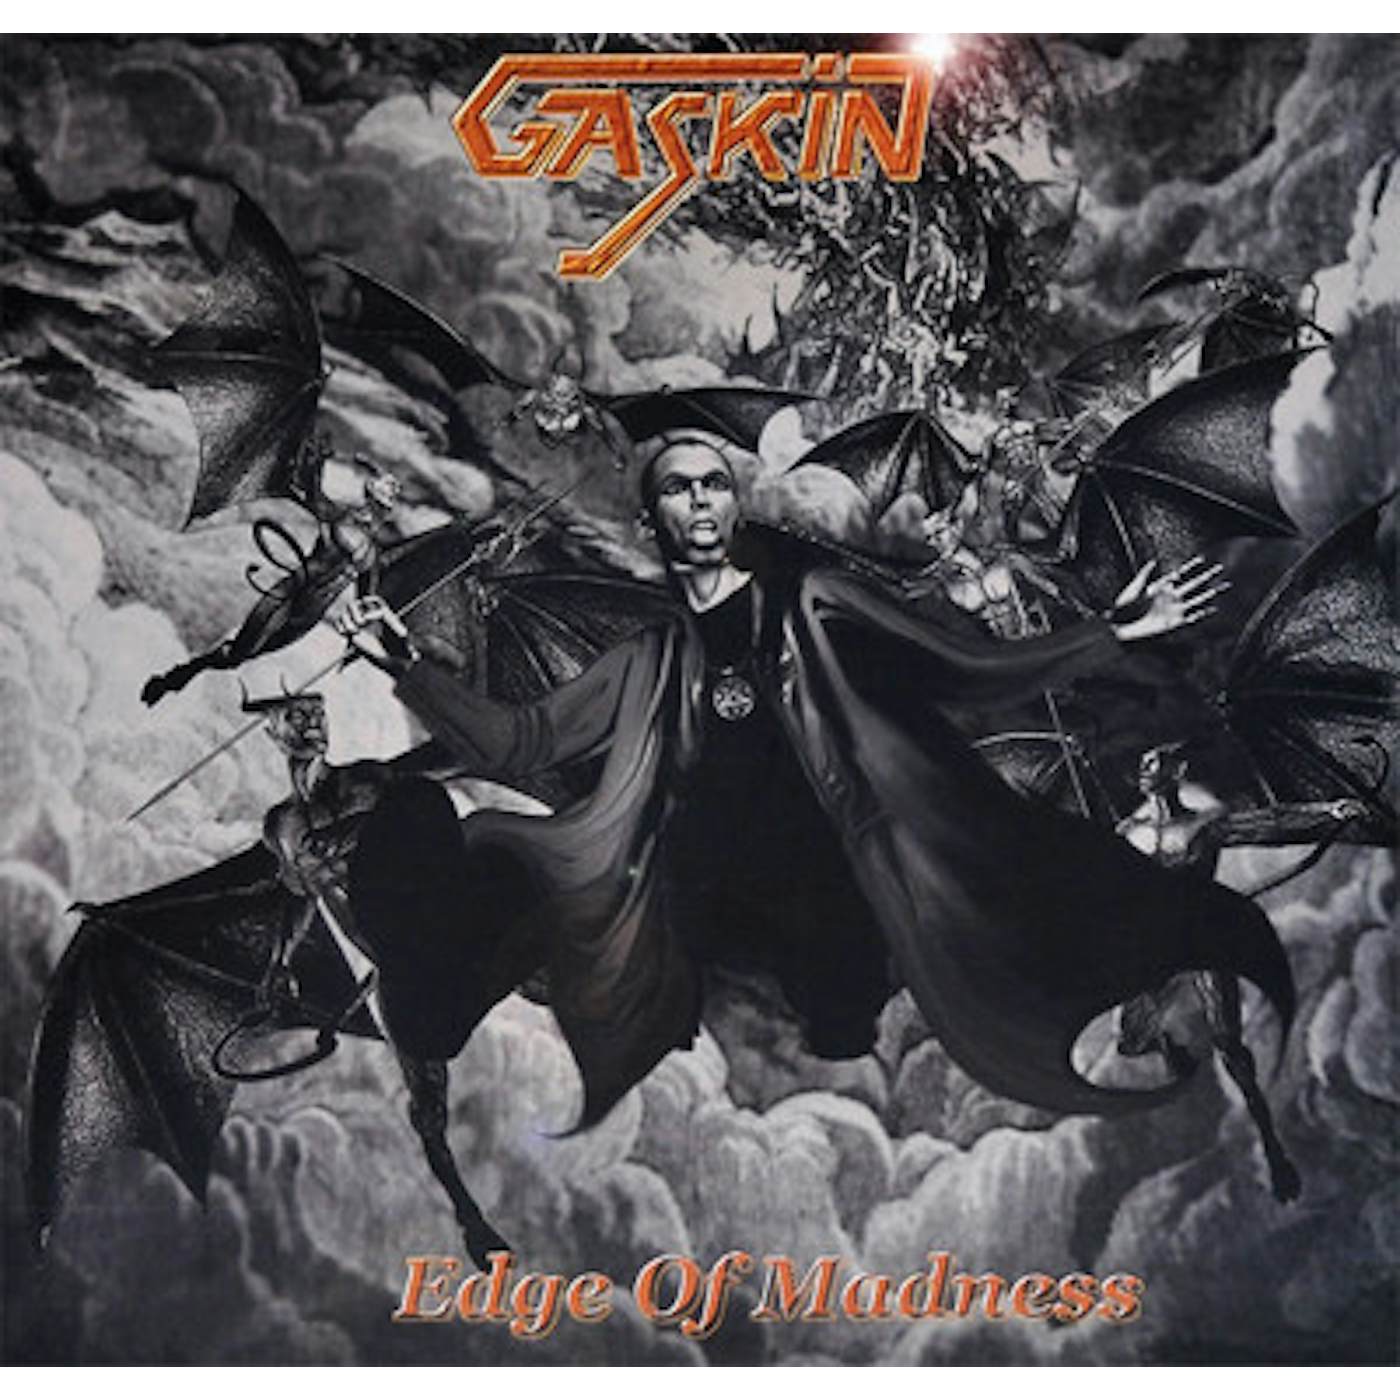 Gaskin Edge Of Madness Vinyl Record